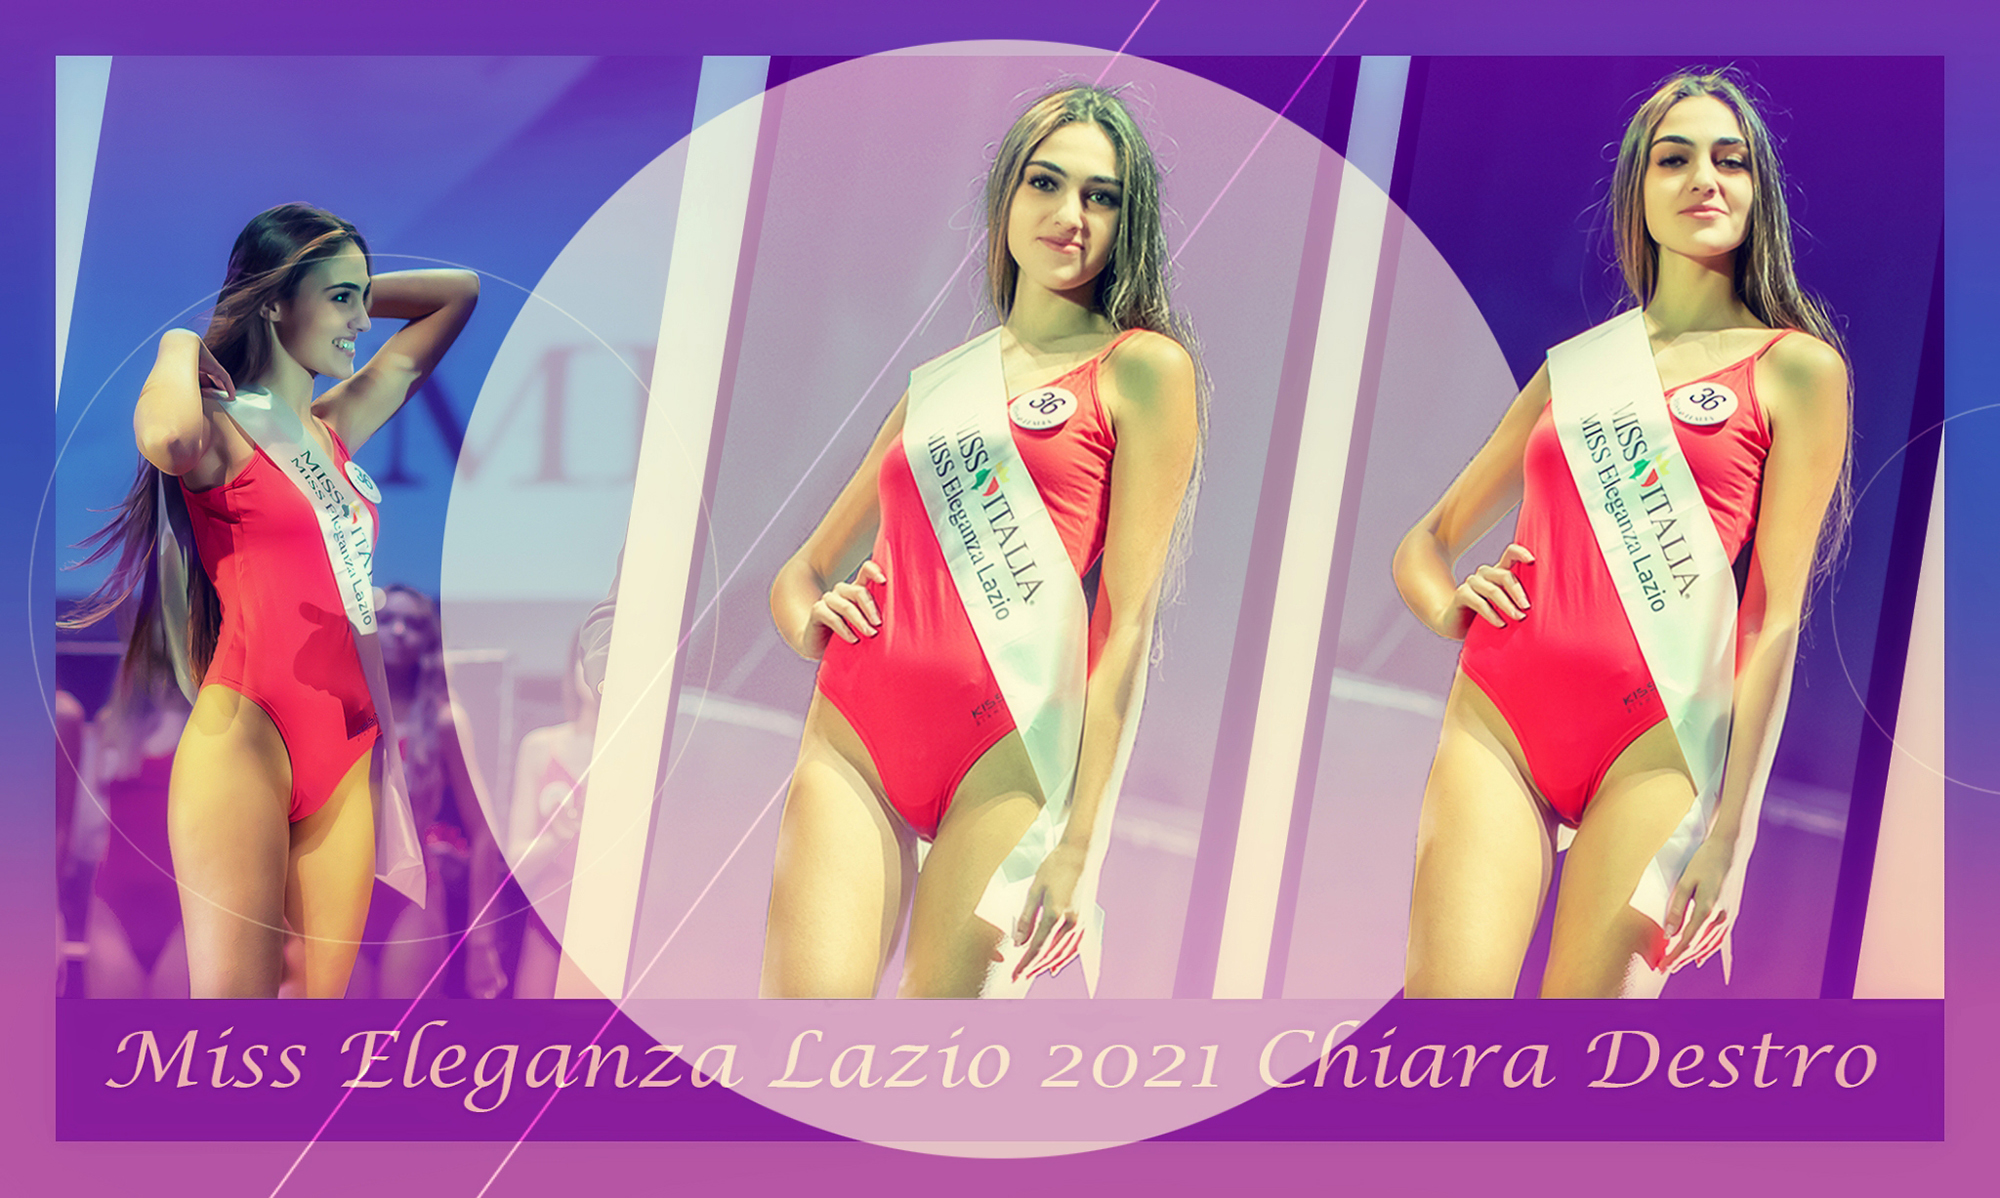 Miss Eleganza Lazio 2021 Chiara Destro - DMG